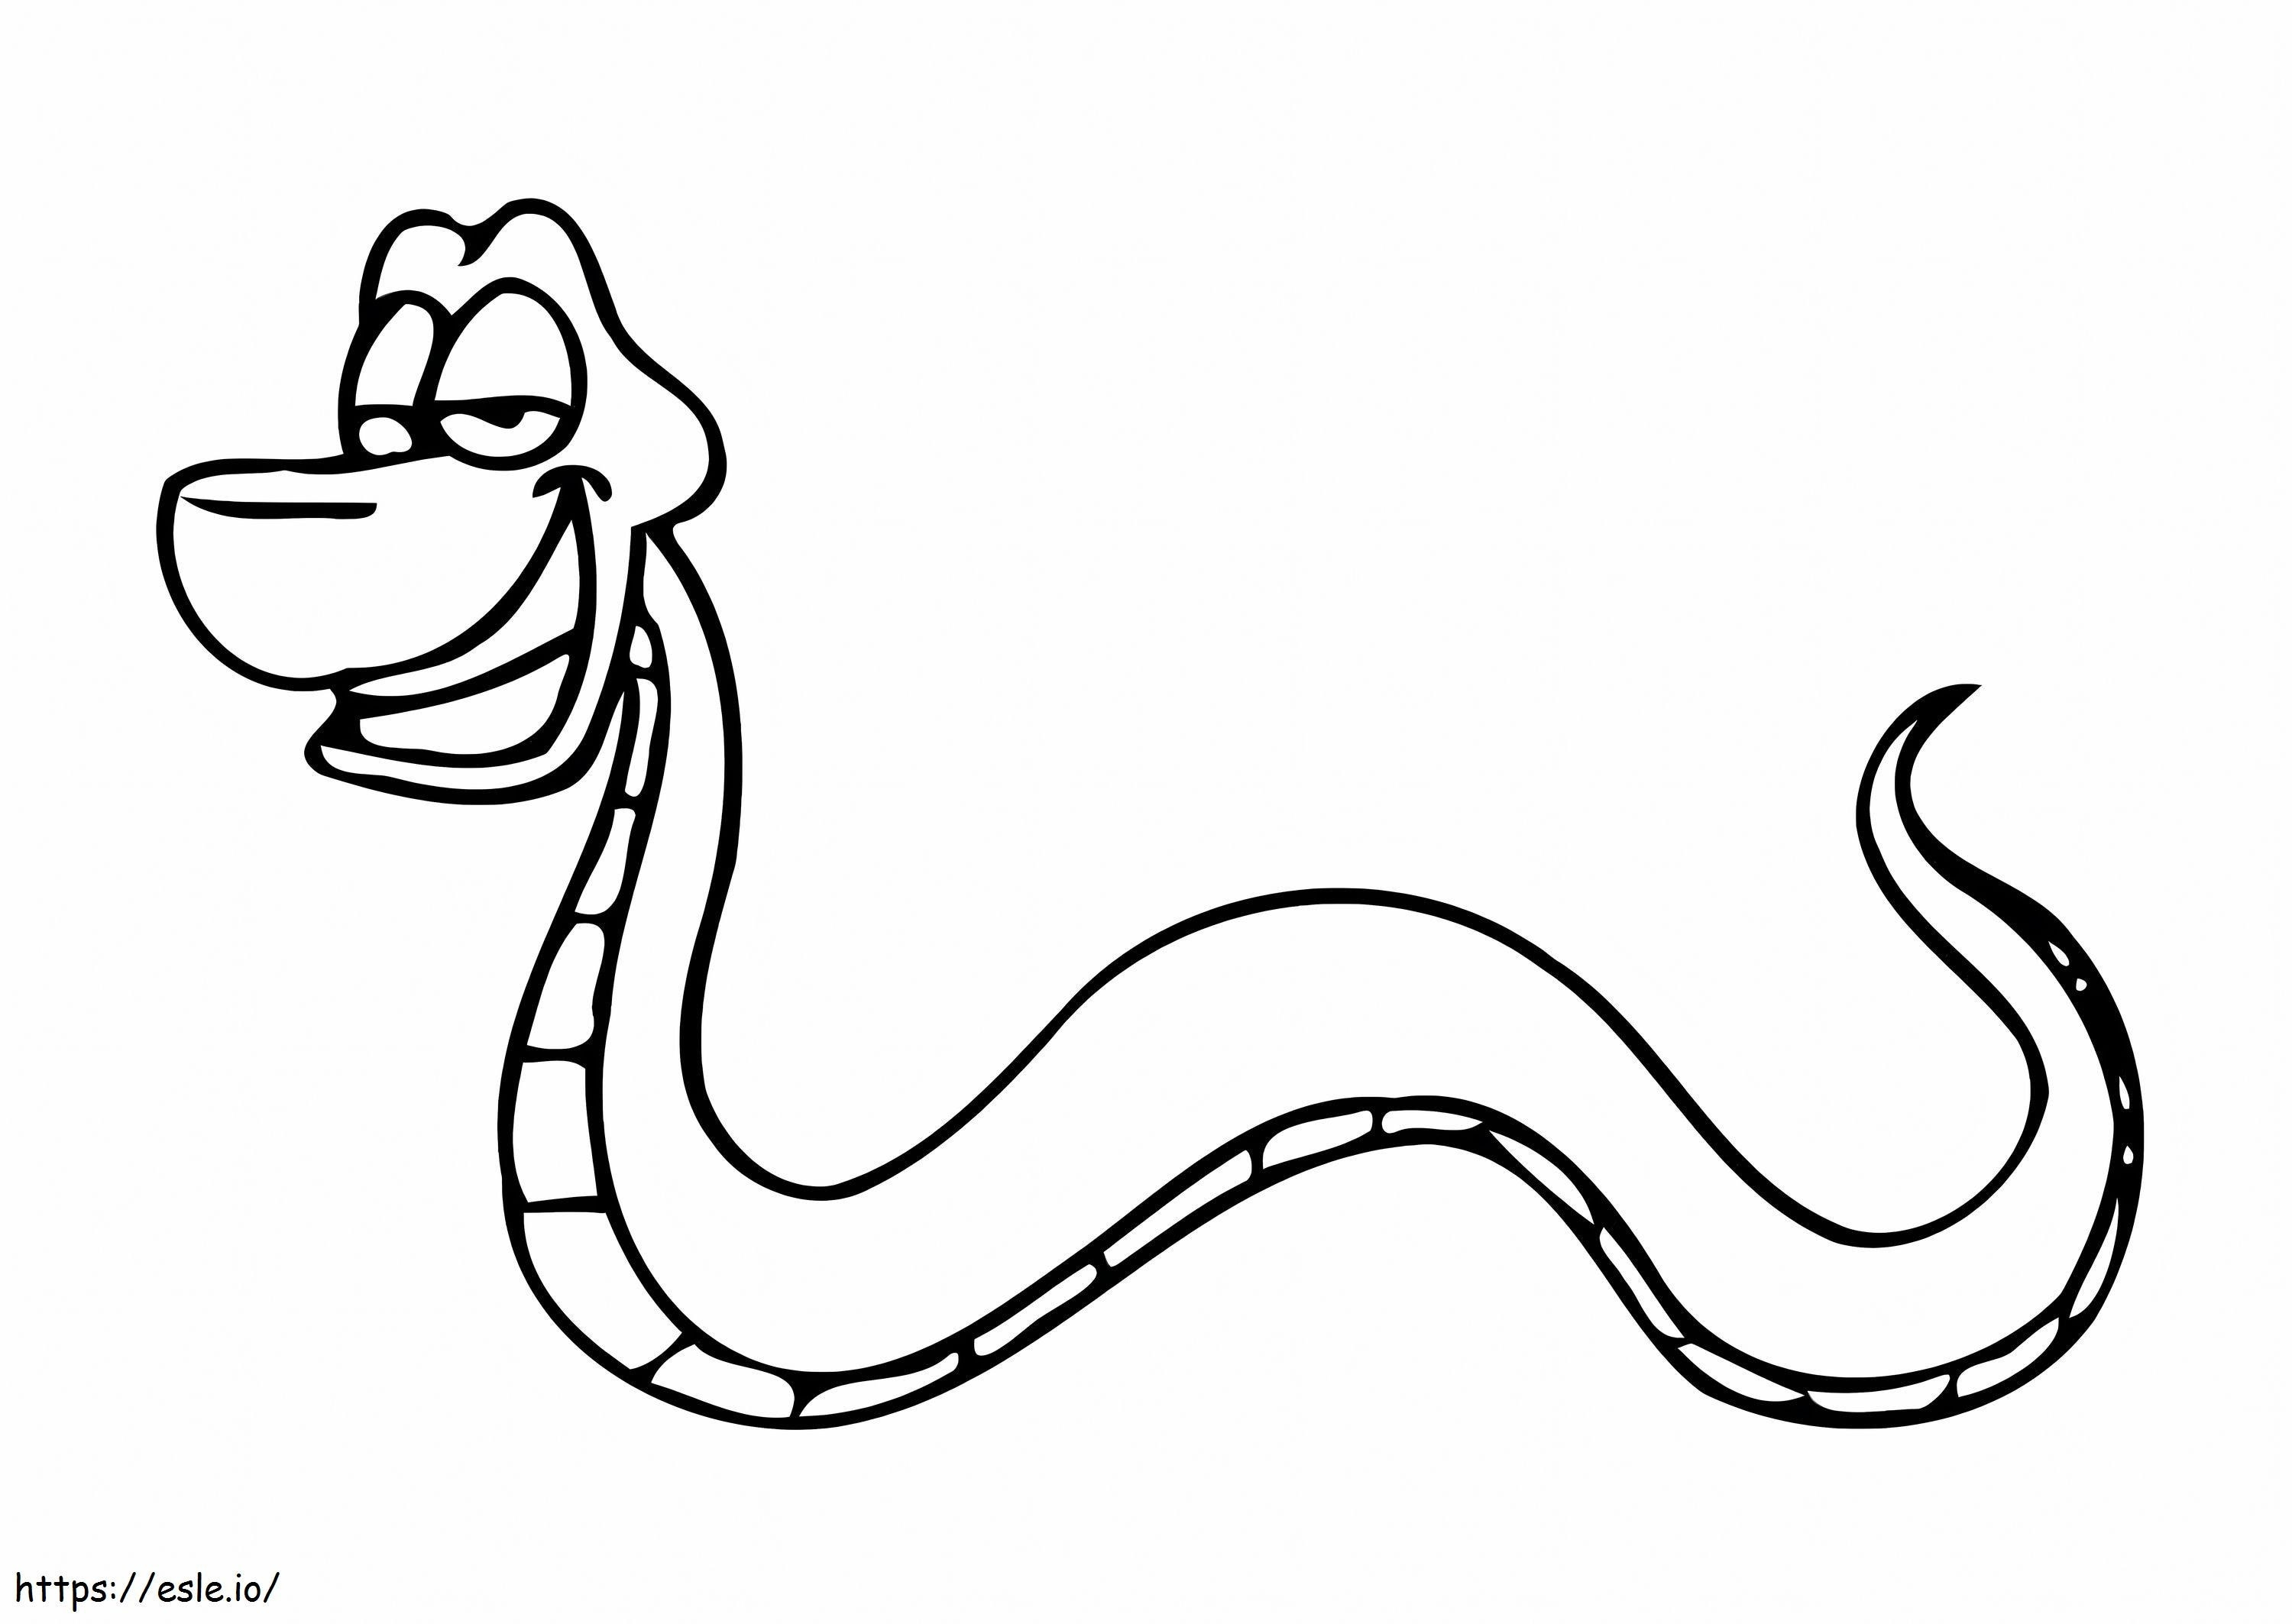 Fun Snake coloring page